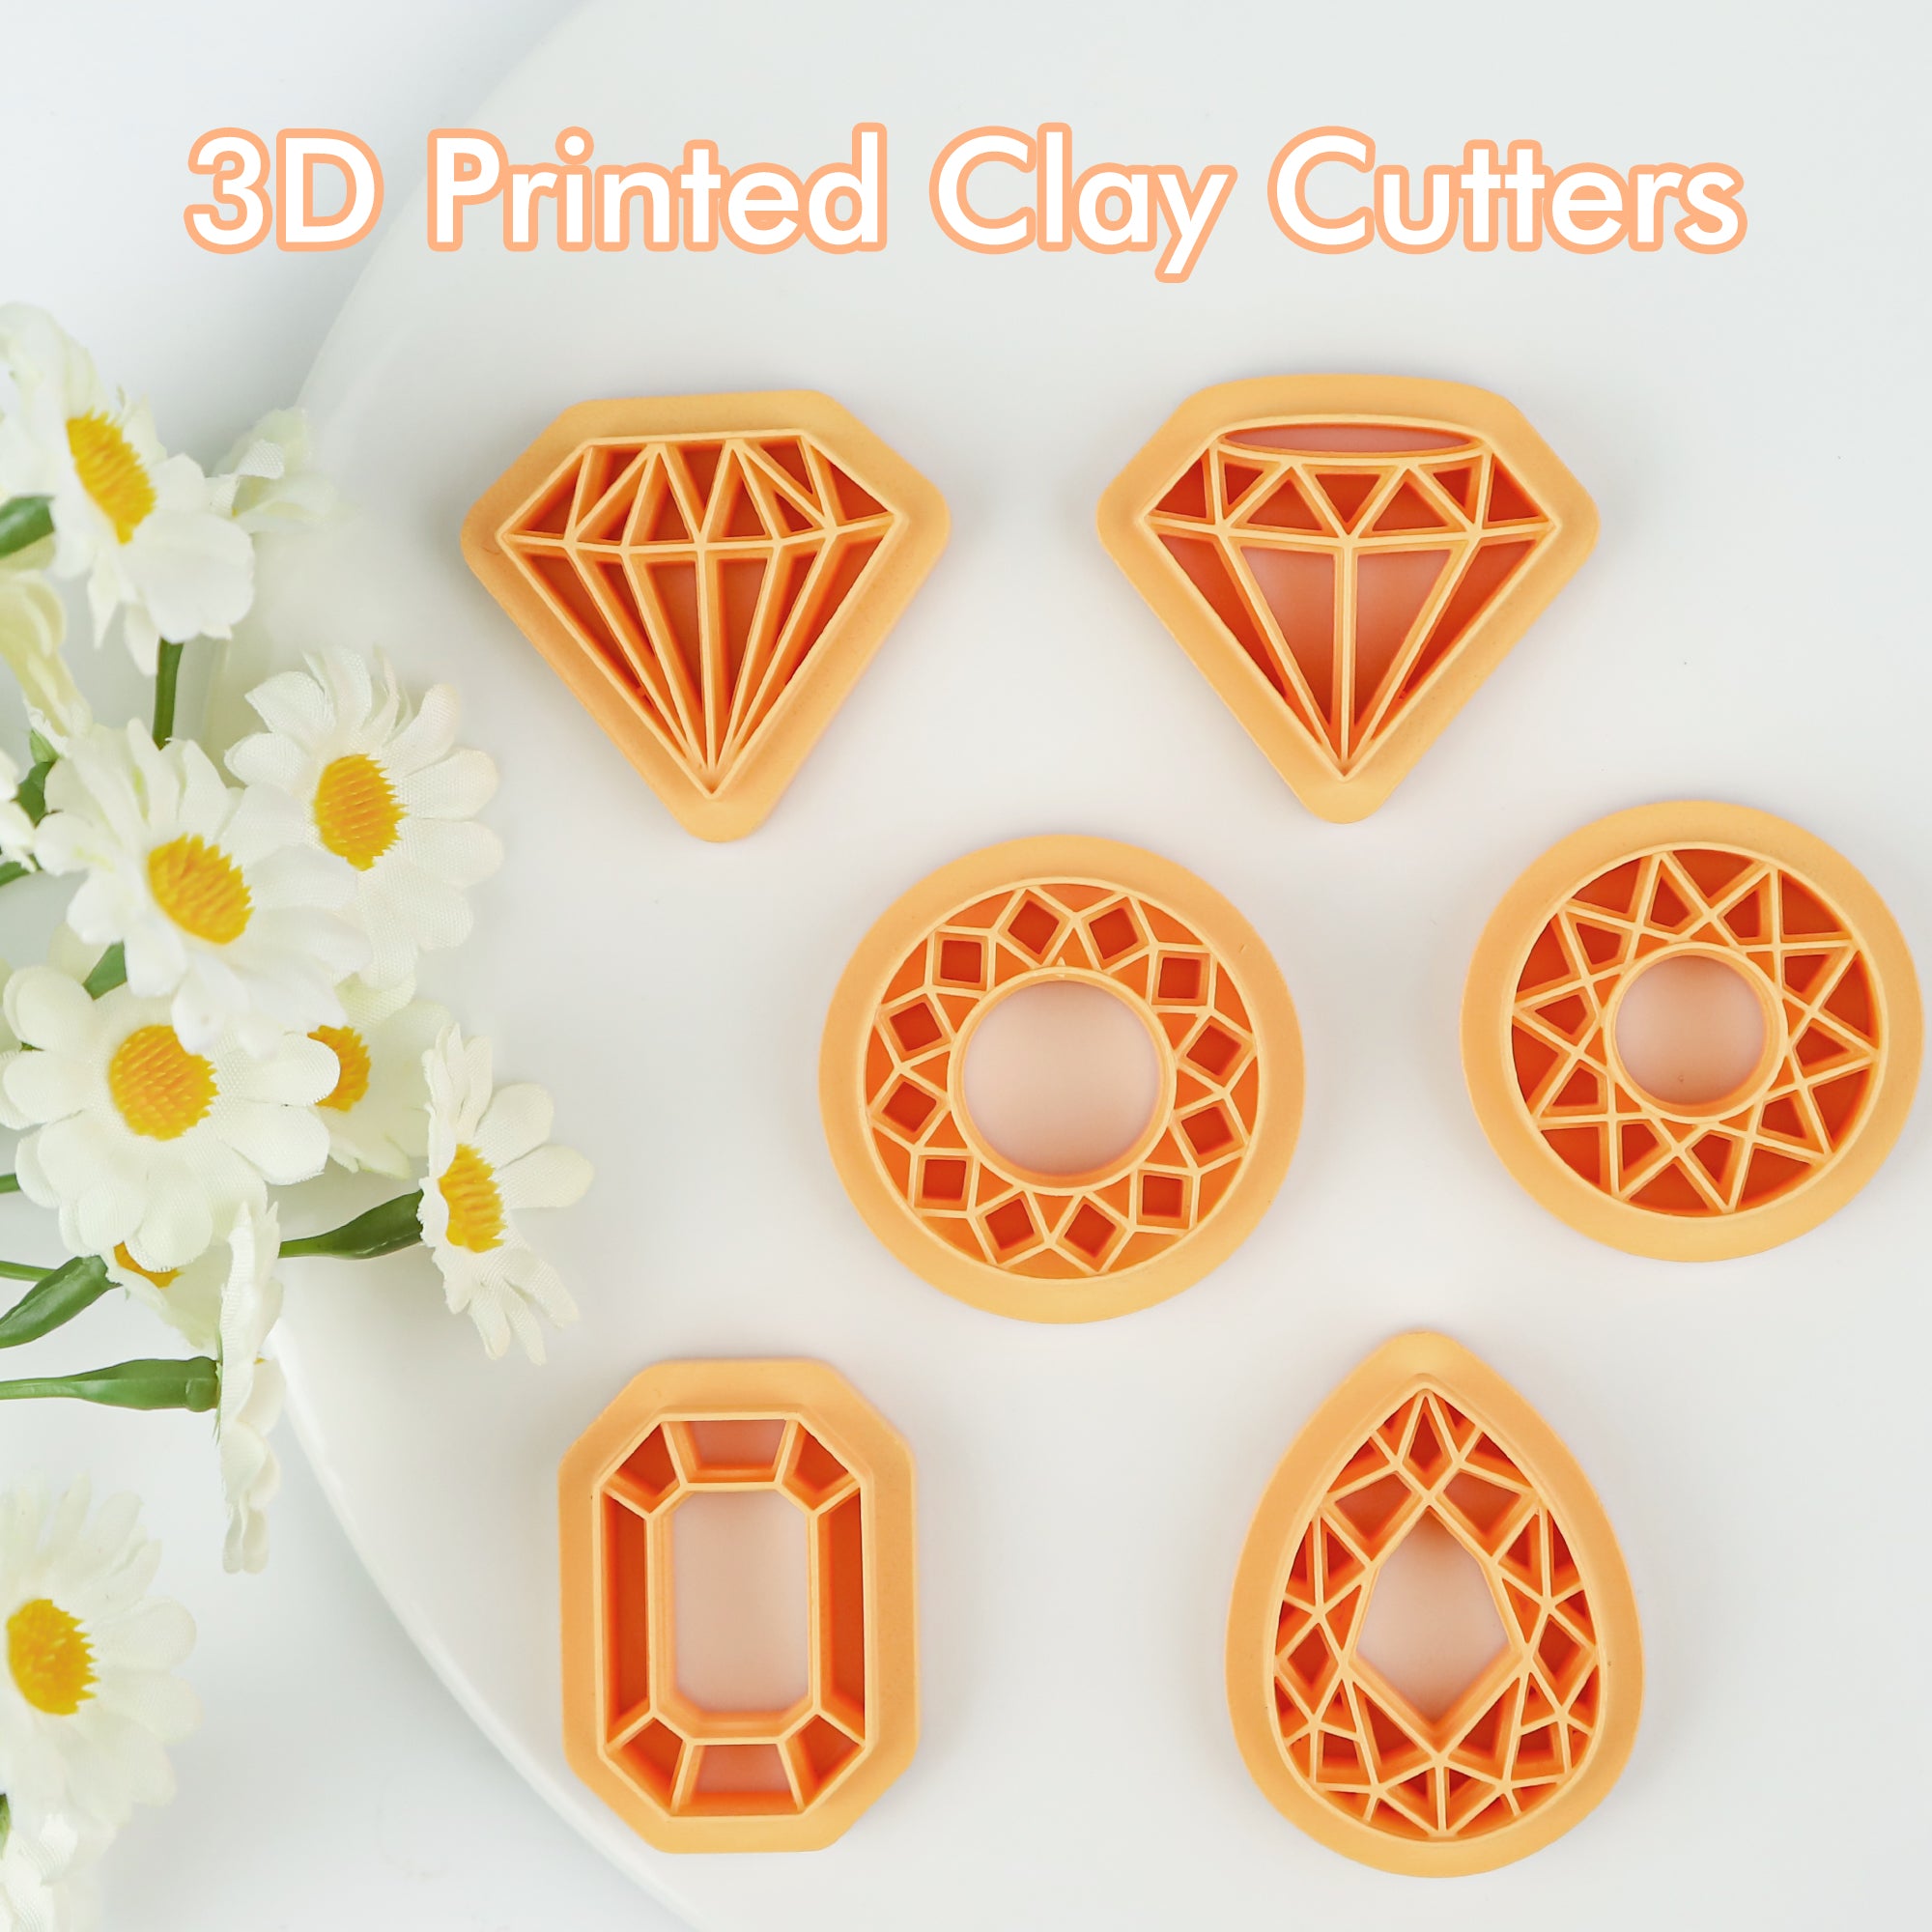 Puocaon Diamond Jewelry Clay Cutters 6 Pcs